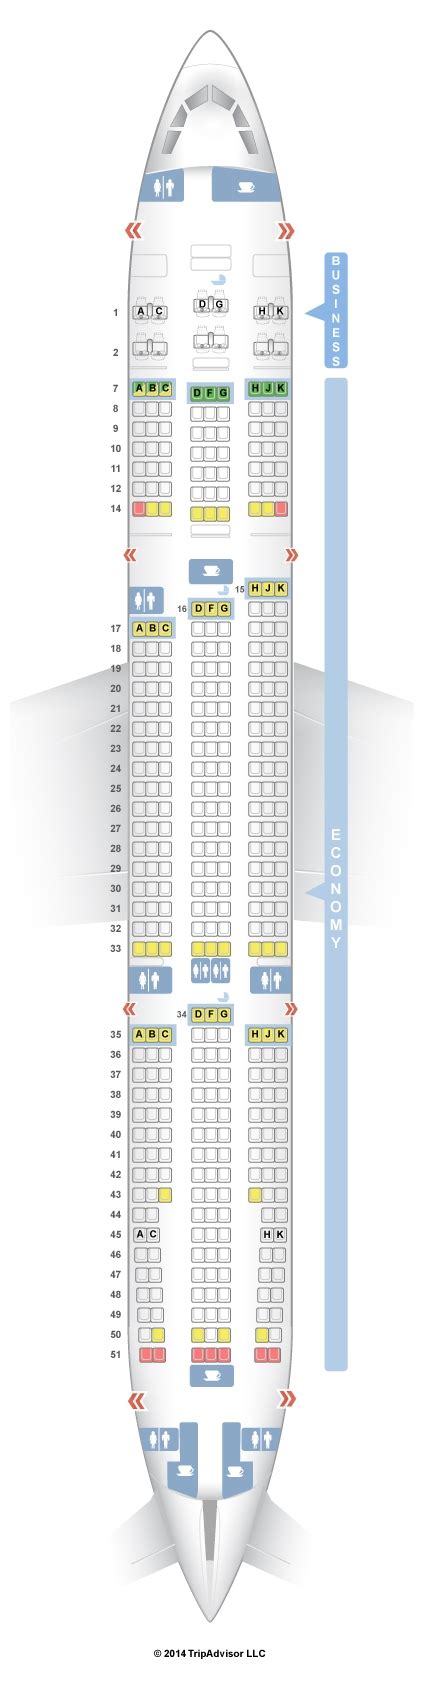 7 Pics A330 Seat Map Air Asia And Description Alqu Blog